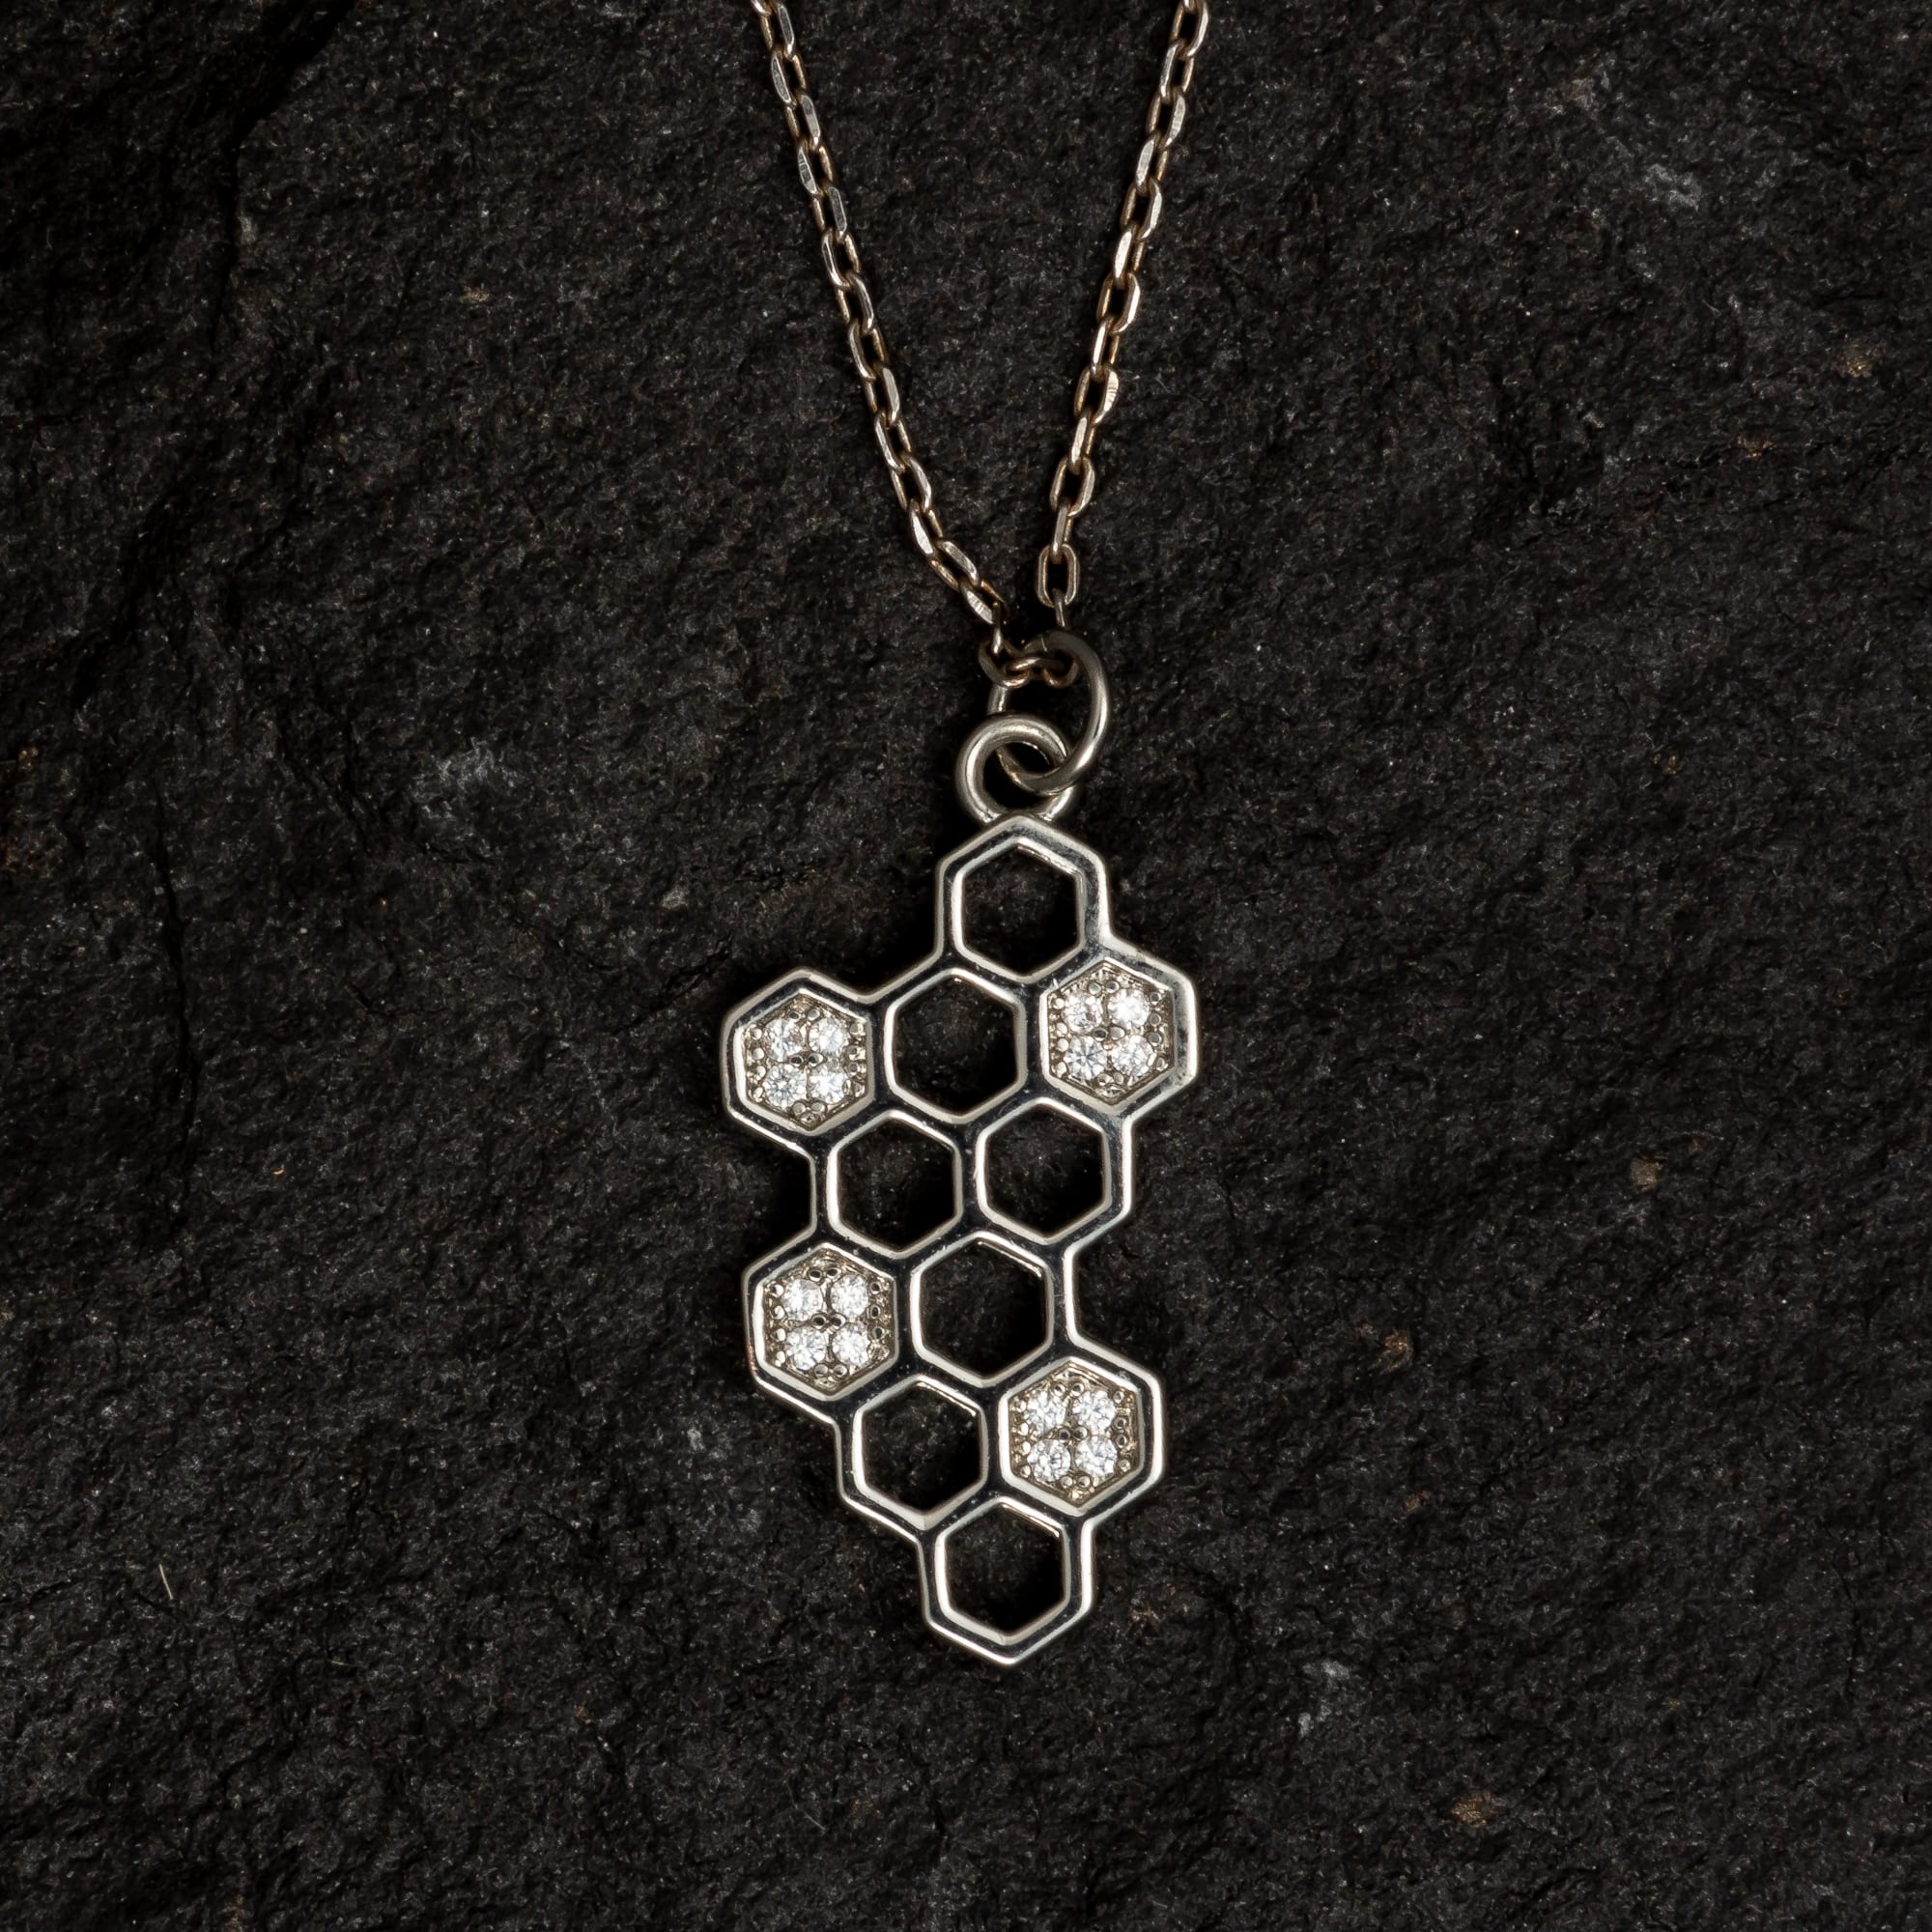 Honey Comb Necklace with Gemstones - Necklaces